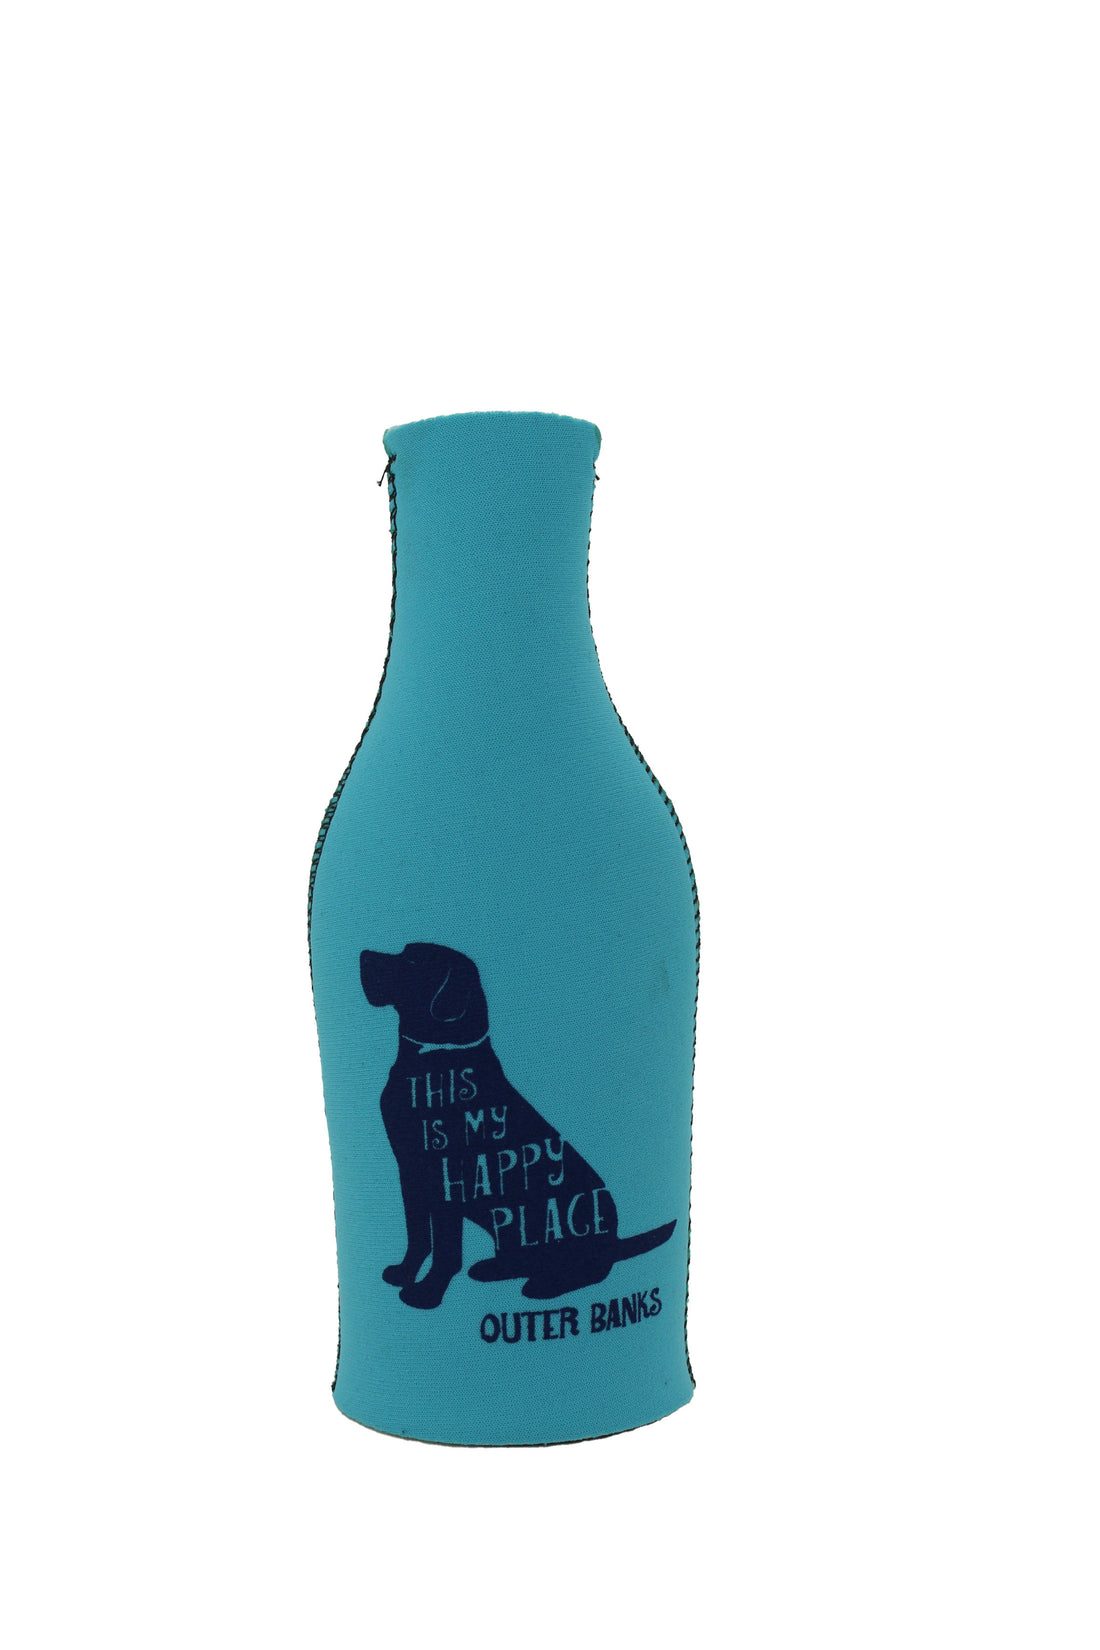 OBX Happy Place Dog Bottle Koozie